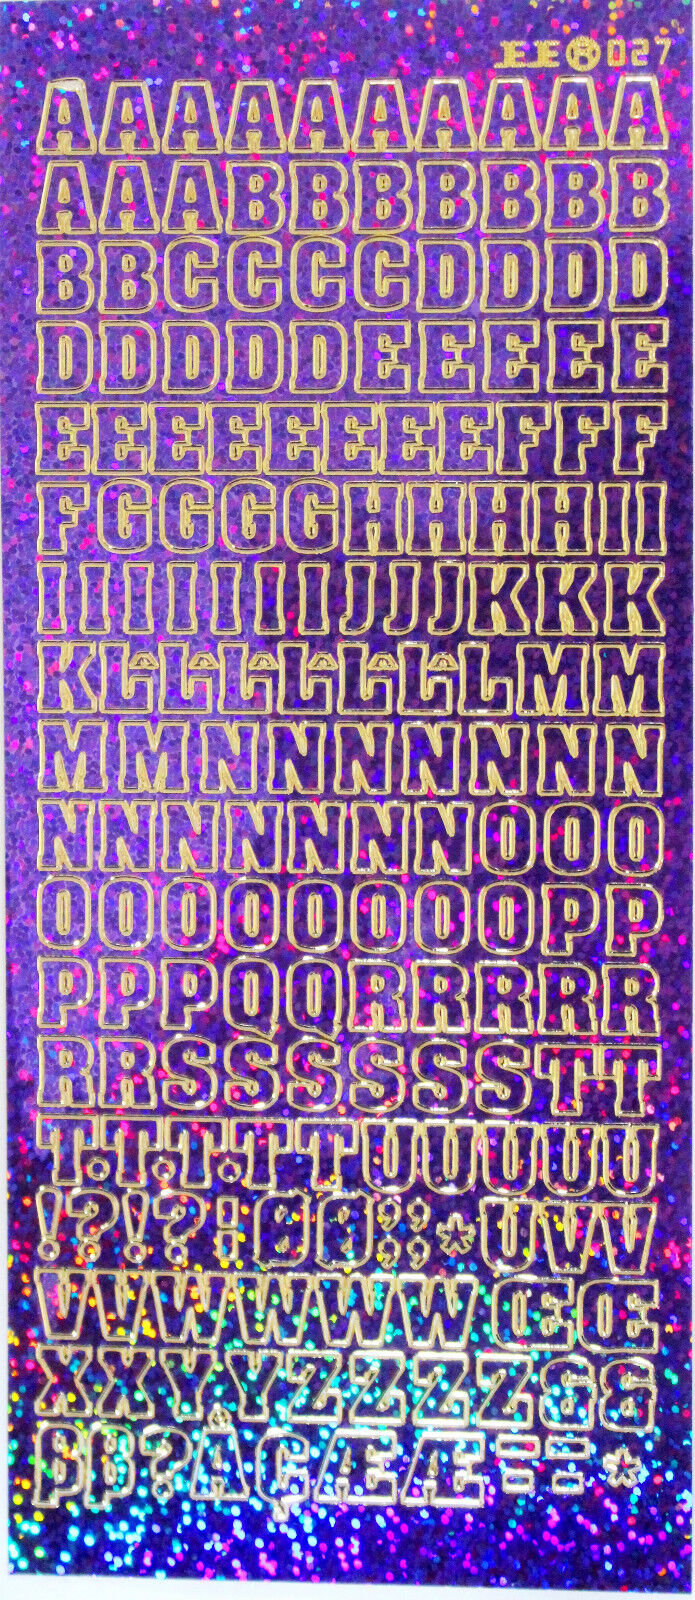 Diamond Sparkle Alphabet Letters Peel Off Sticker Sheet Card Making Art & Craft